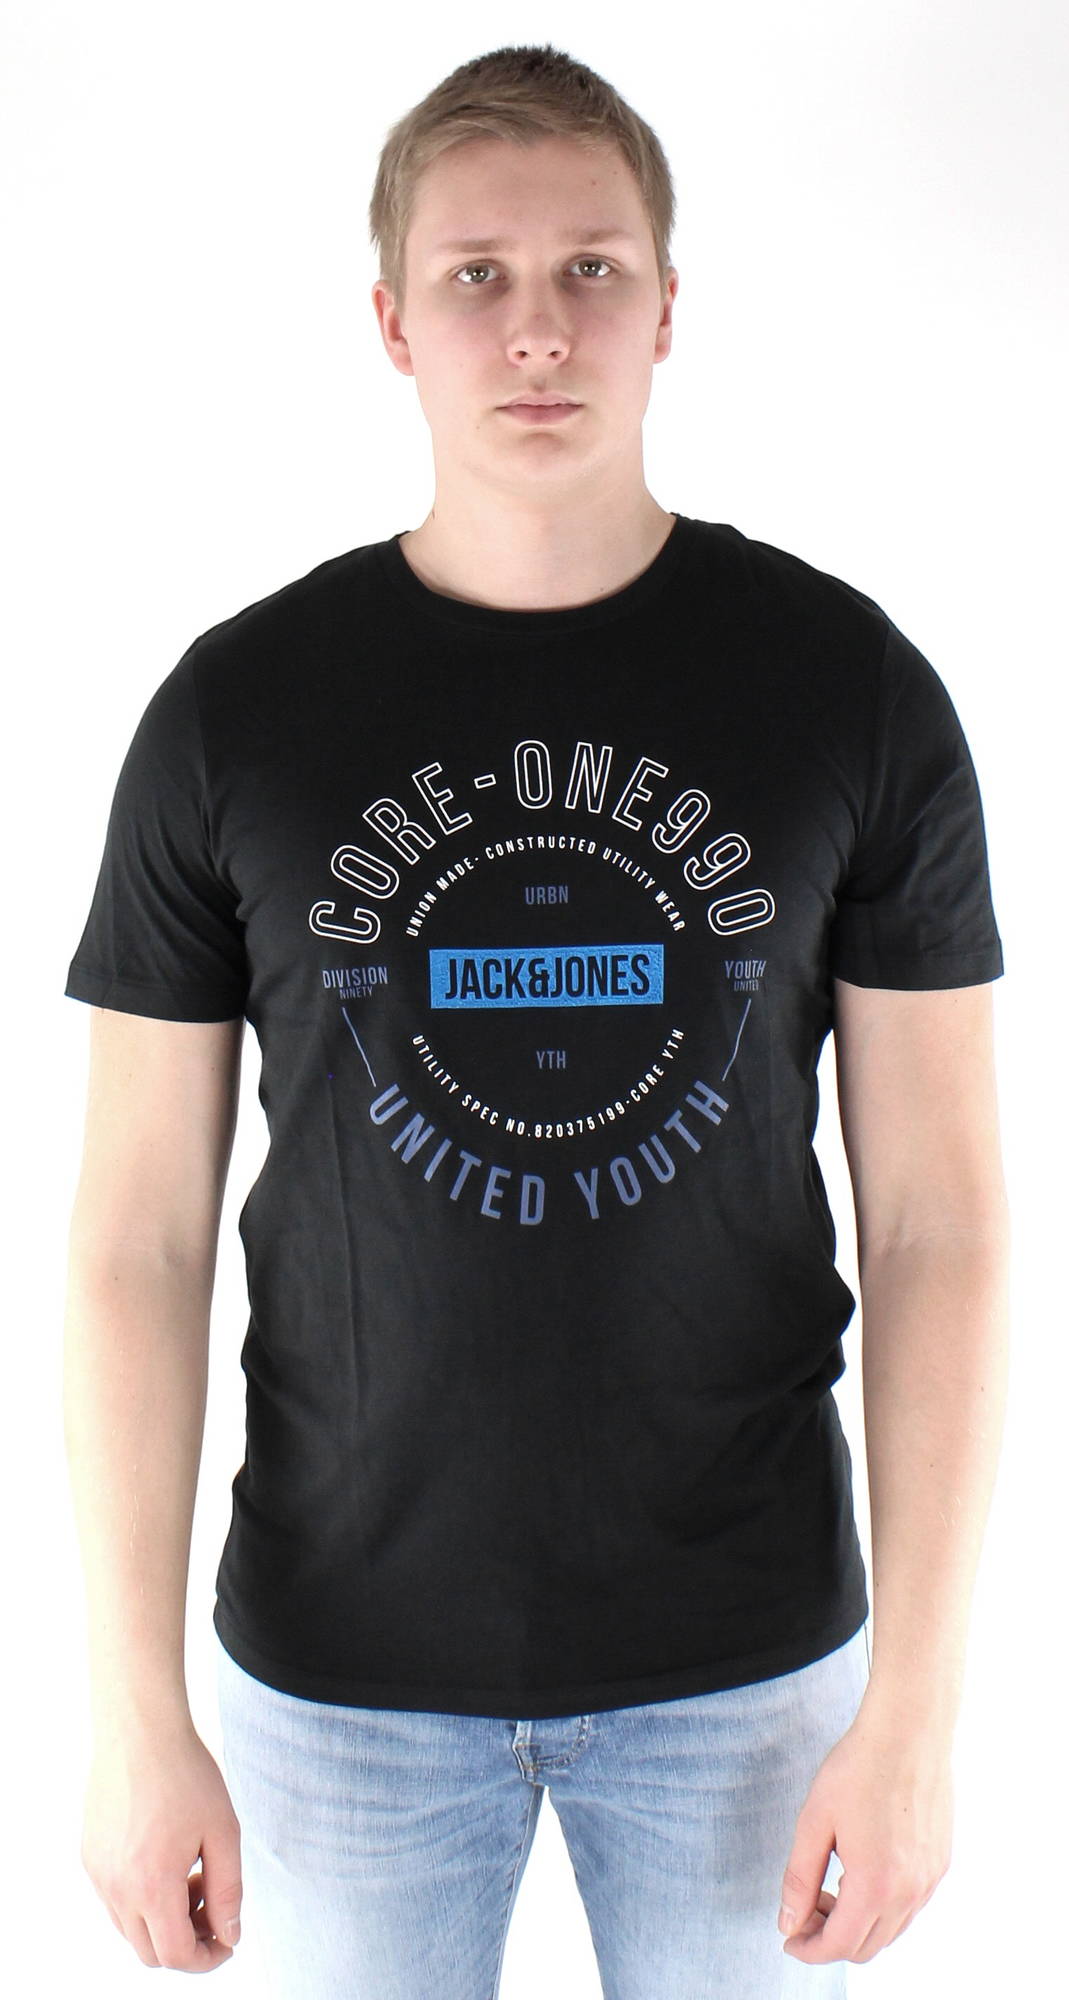 Jack&Jones T-shirt Koi ss crew neck - Stilettoshop.eu webstore